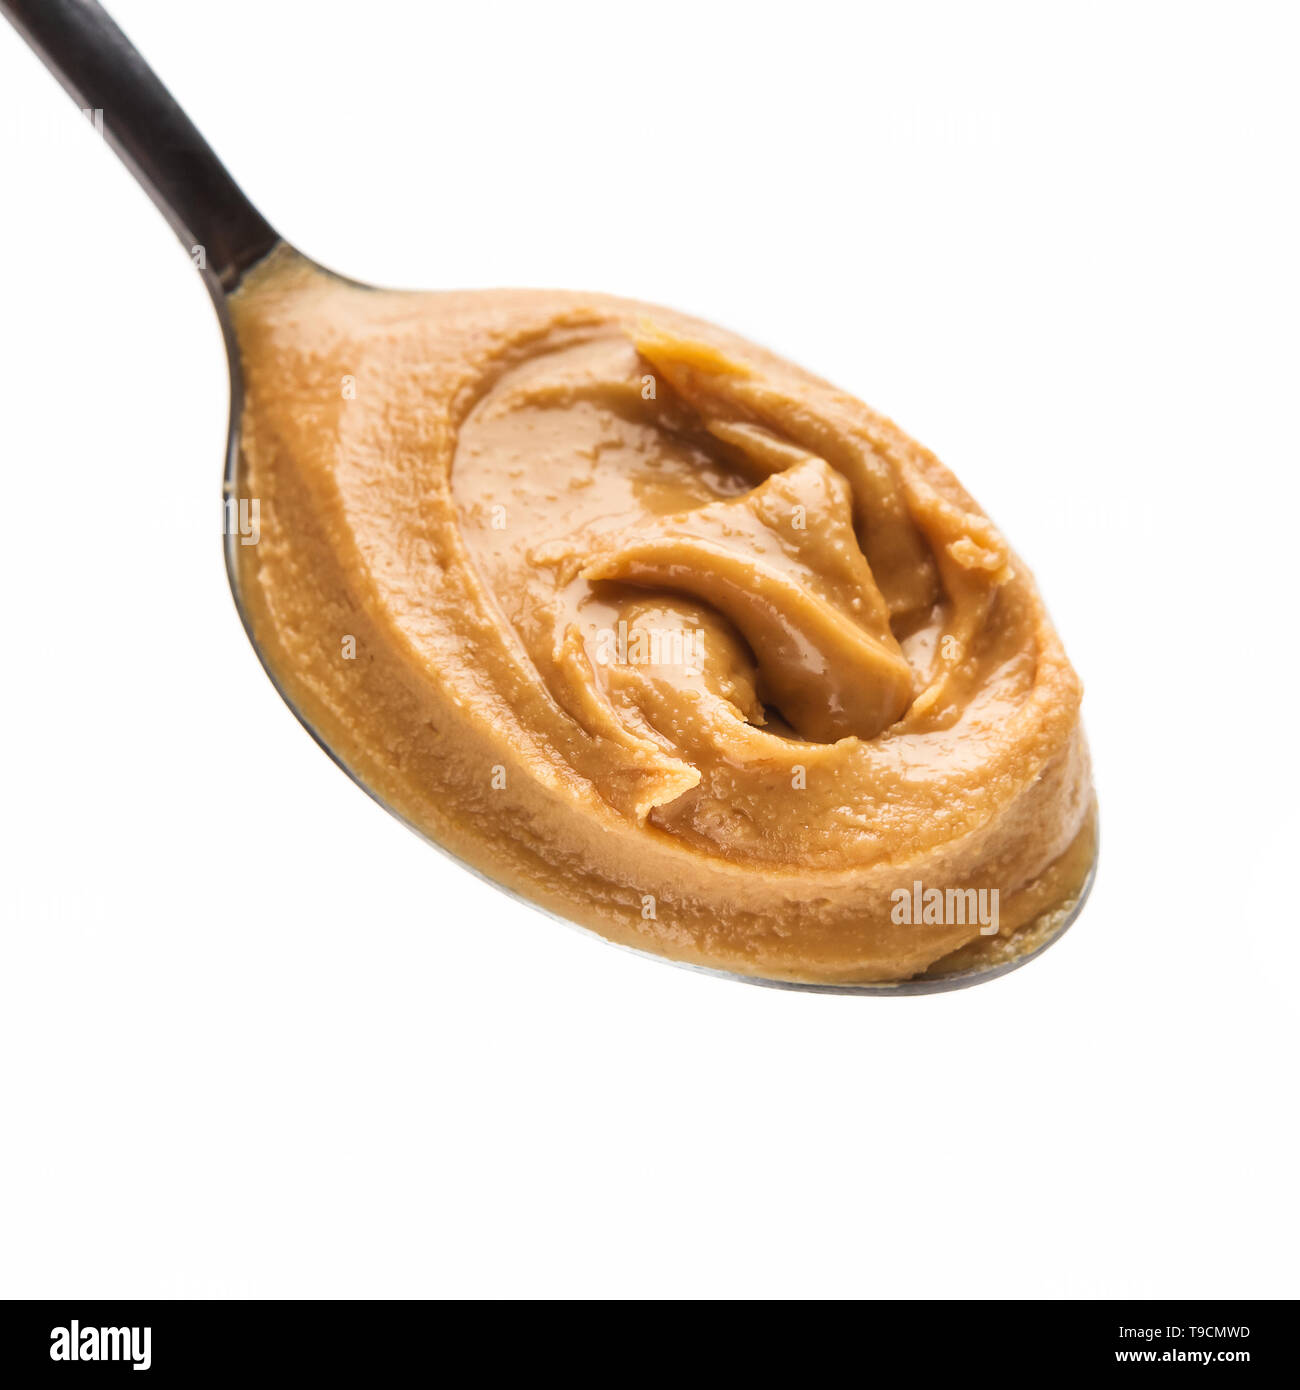 https://c8.alamy.com/comp/T9CMWD/spoon-of-peanut-butter-T9CMWD.jpg